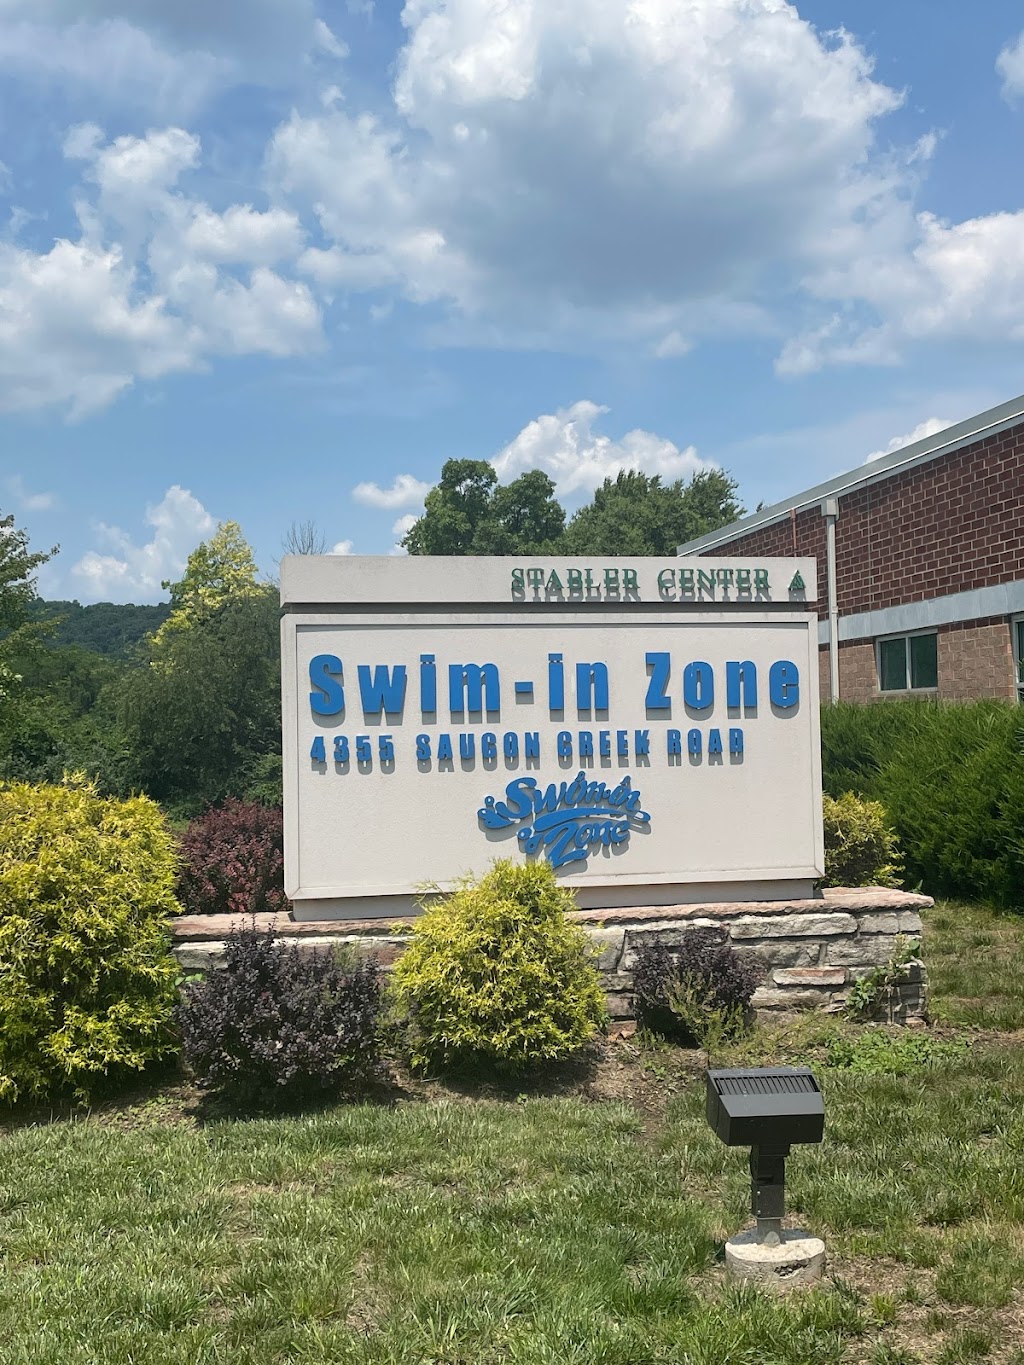 Swim-in Zone | 4355 Saucon Creek Rd, Center Valley, PA 18034 | Phone: (610) 625-4848